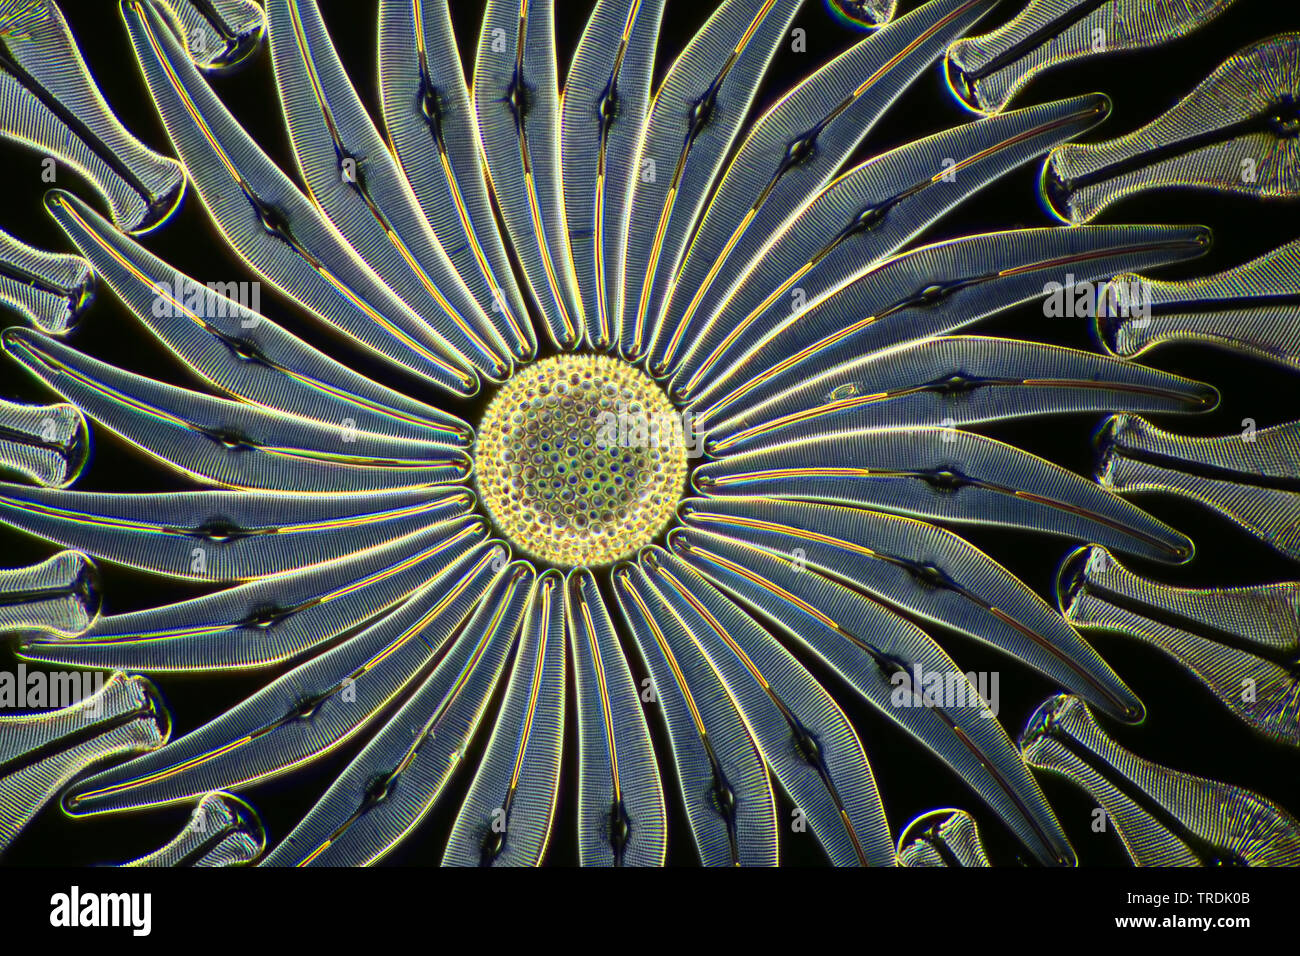 diatom (Diatomeae), dioatomeen in darkfield, x 100 Stock Photo